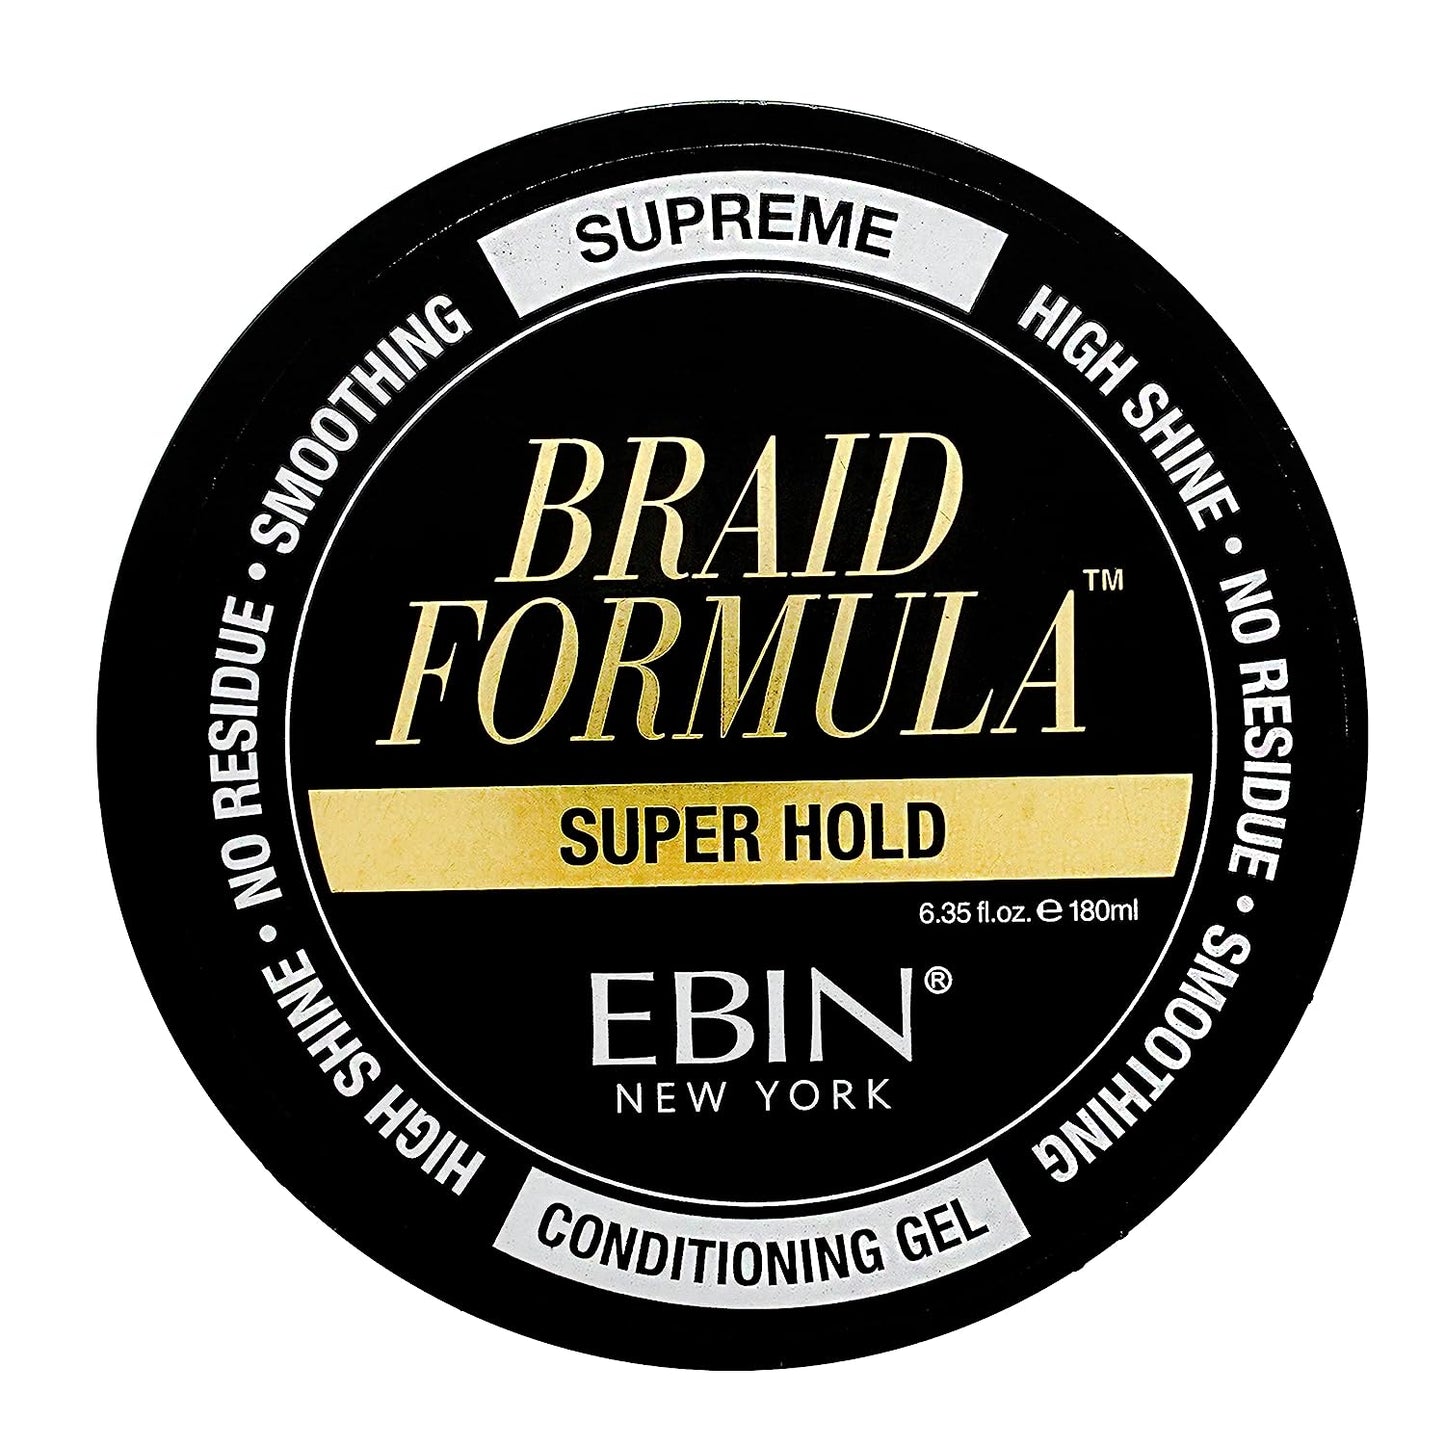 EBIN NEW YORK Braid Formula Conditioning Gel, Super Hold, 11oz - VIP Extensions